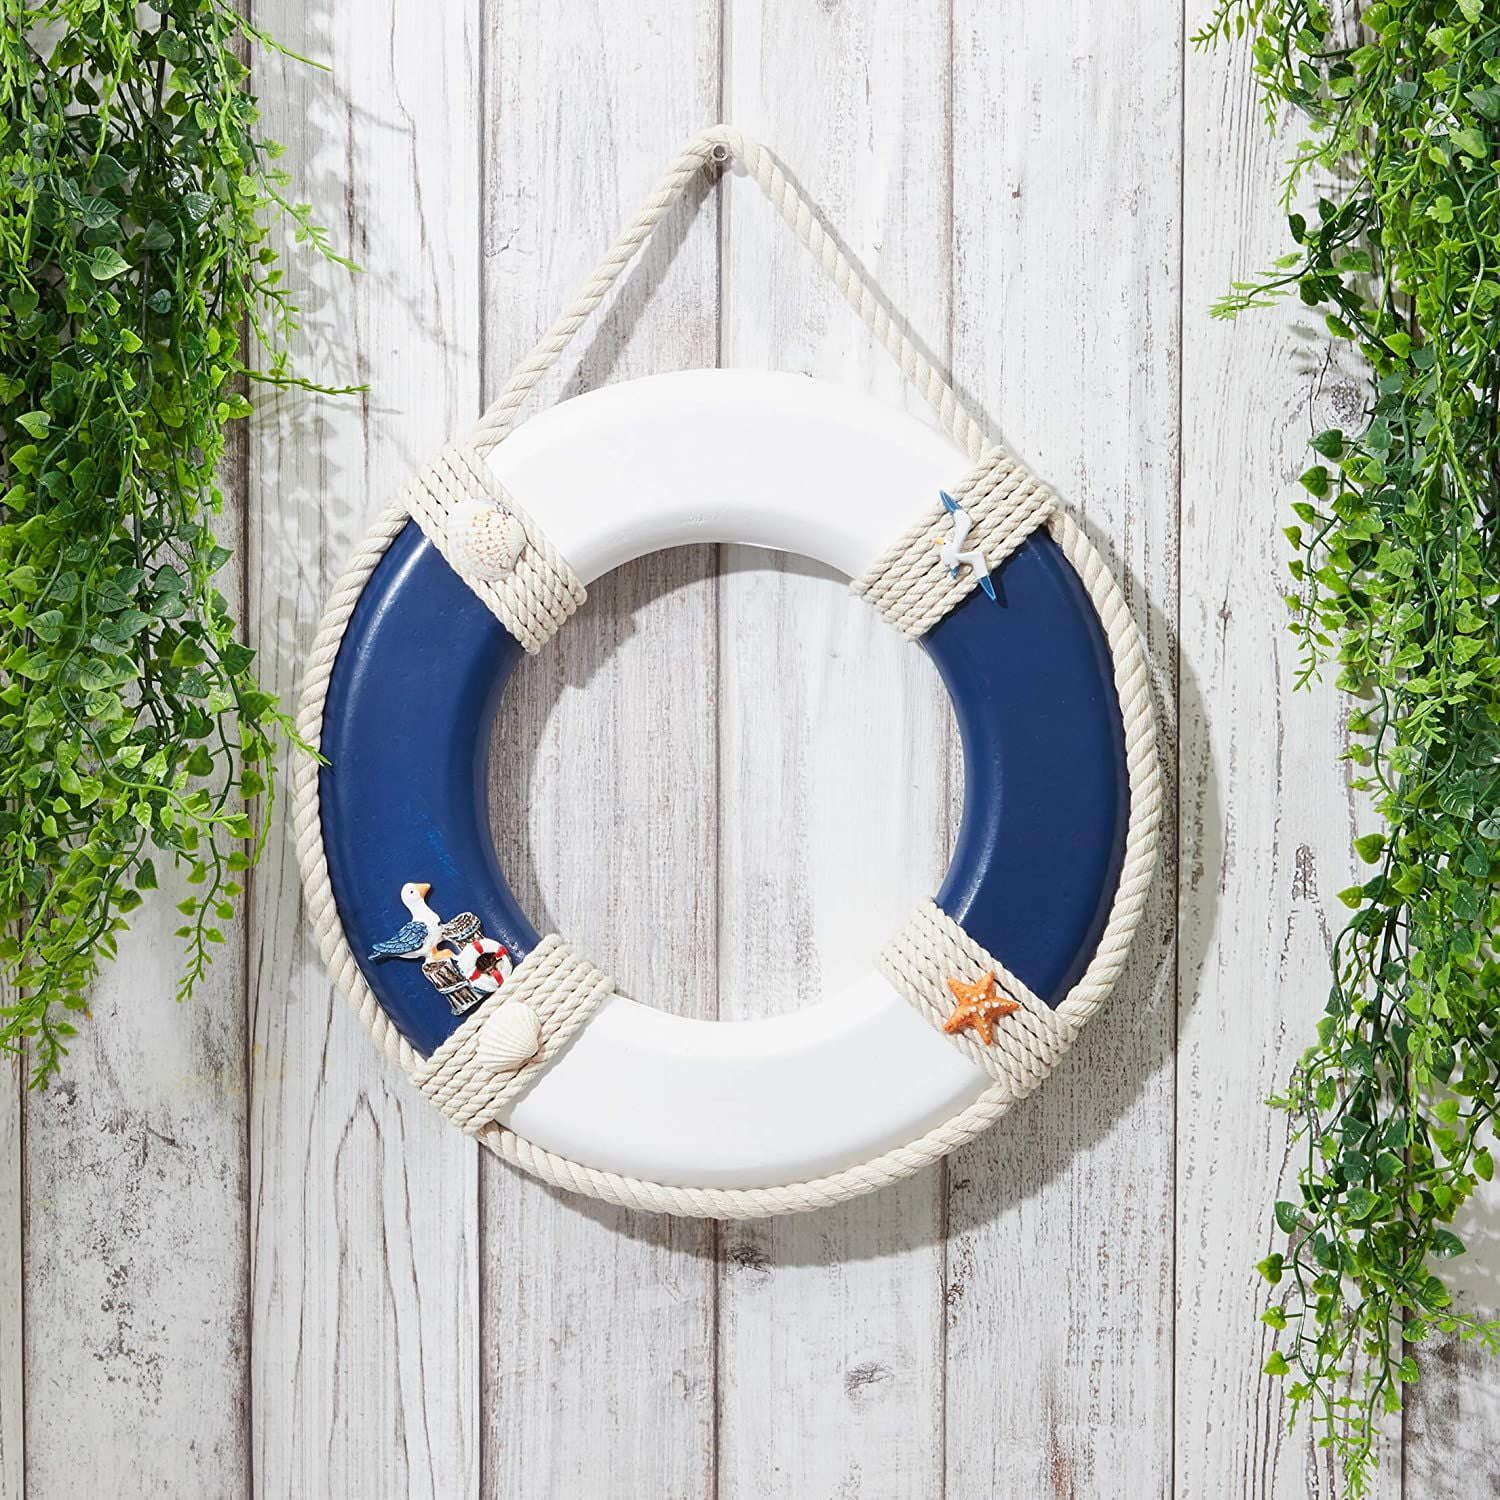 blue PiniceCore Nautical Life Ring Nautical Decorative Life Ring Nautical Lifebuoy Ring Home Wall Door Hangings Decor 